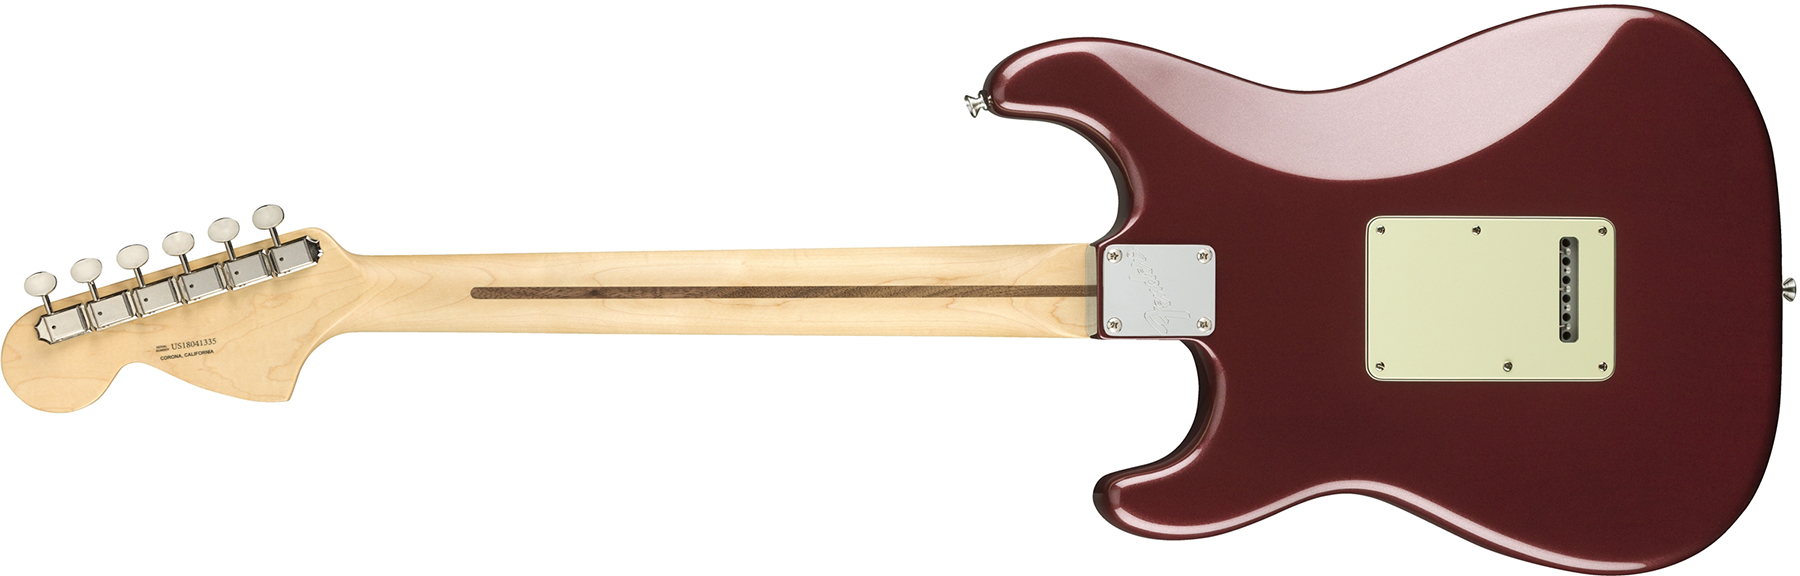 Fender Strat American Performer Usa Hss Rw - Aubergine - Str shape electric guitar - Variation 1